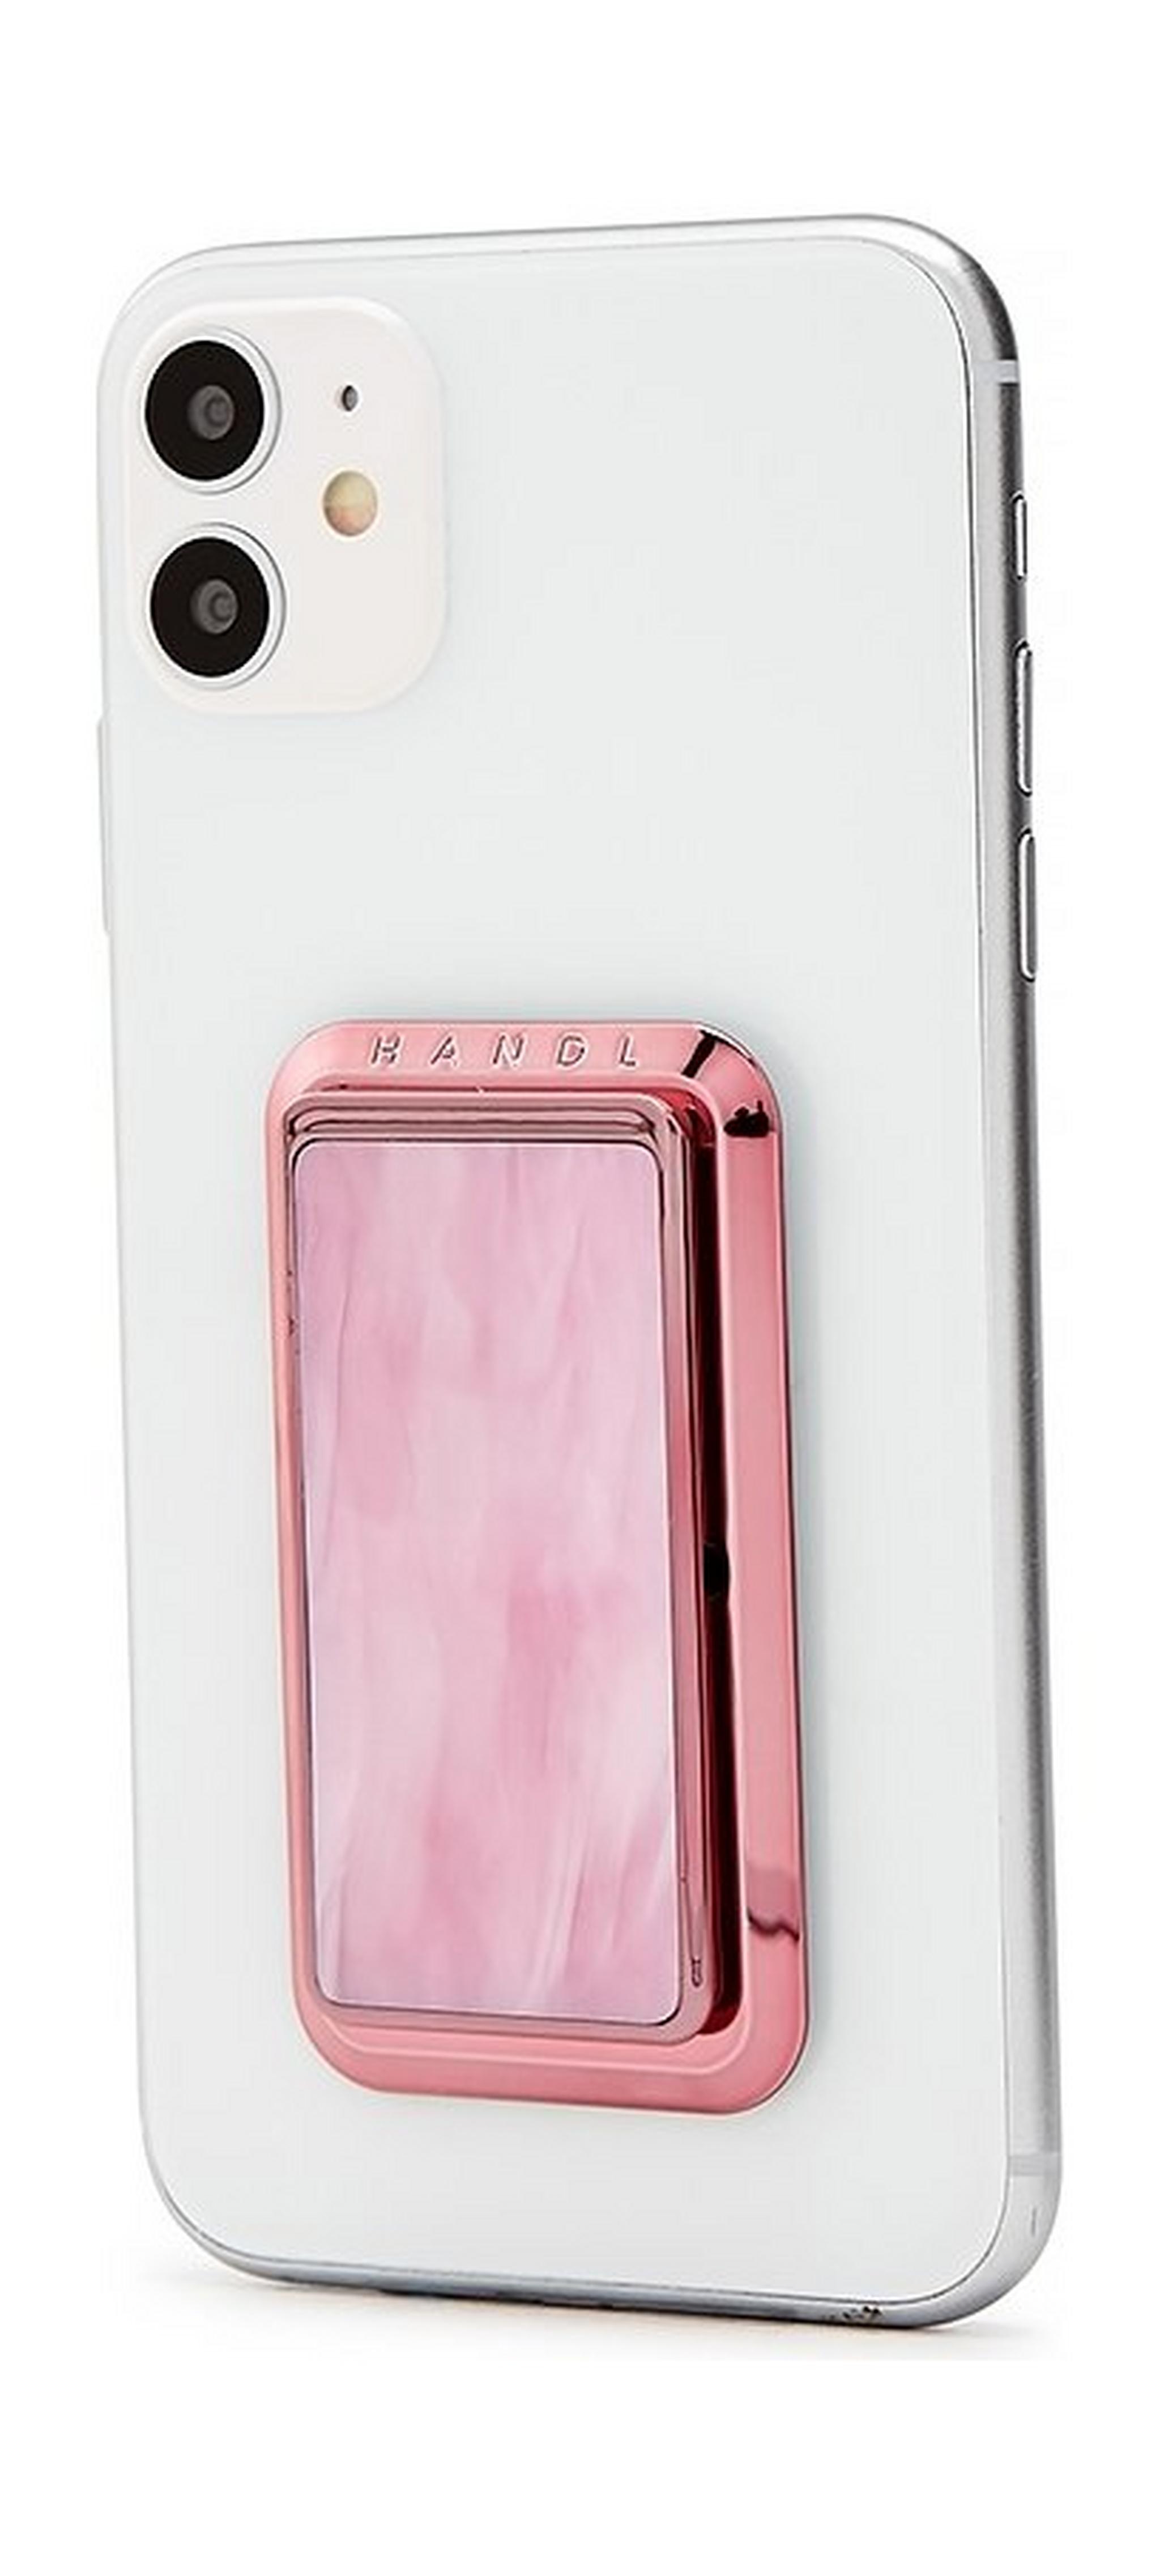 HANDLstick Marble Smartphone Holder - Pink